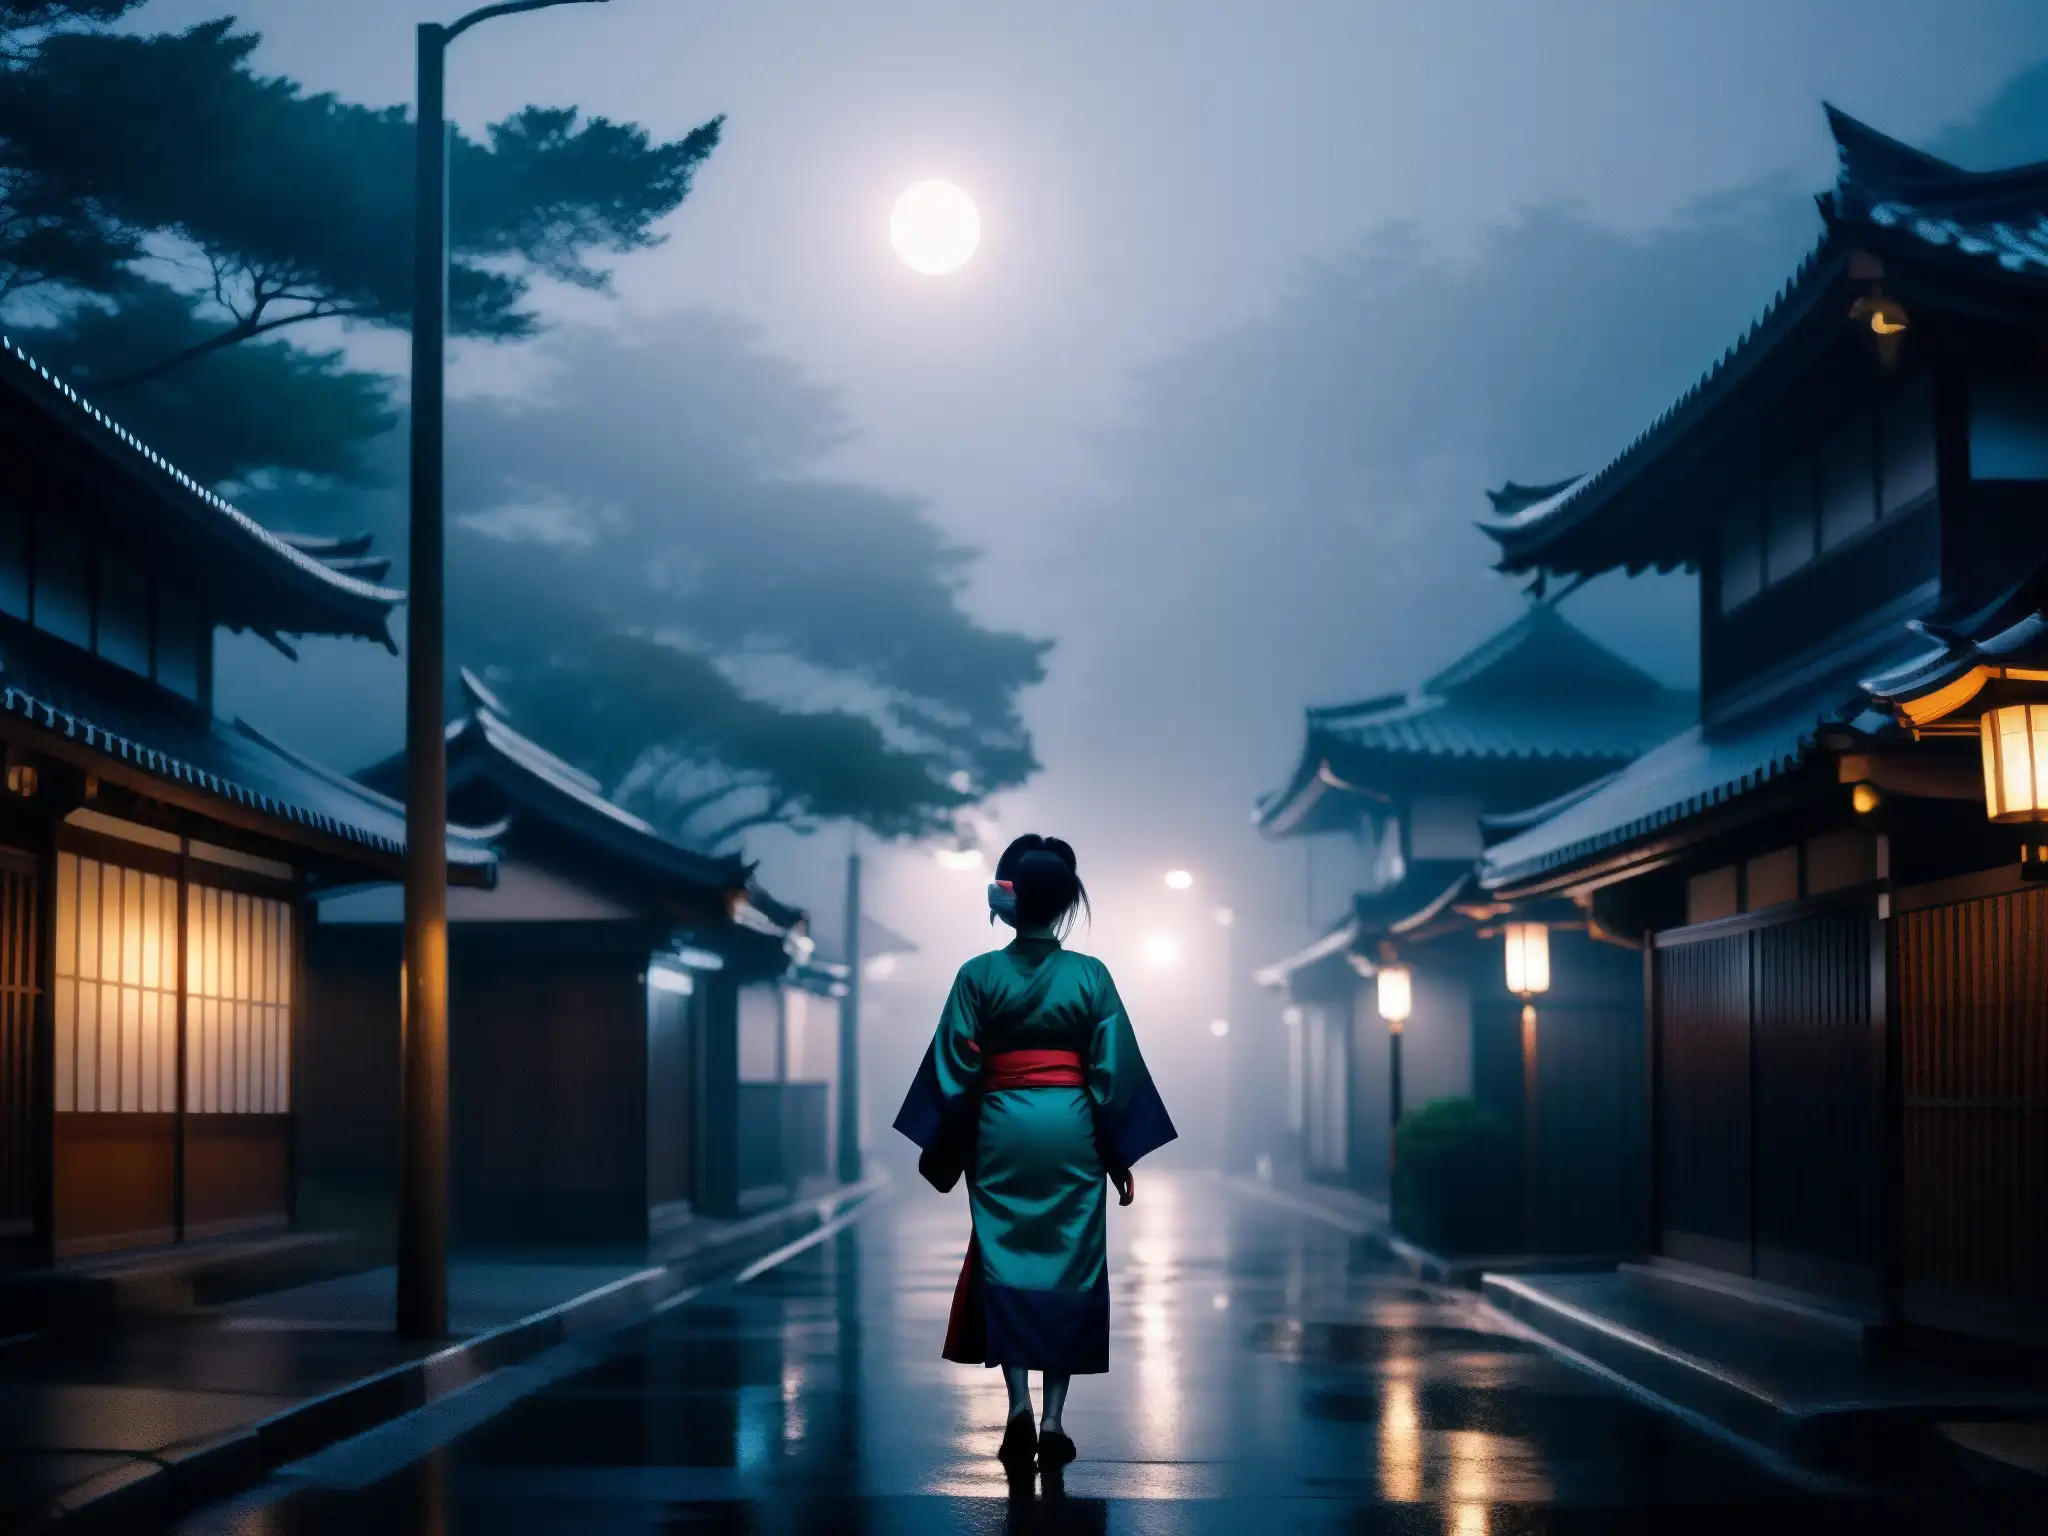 Una mujer en kimono tradicional bajo la luz tenue de la calle, evocando la leyenda urbana de Kuchisakeonna en Japón